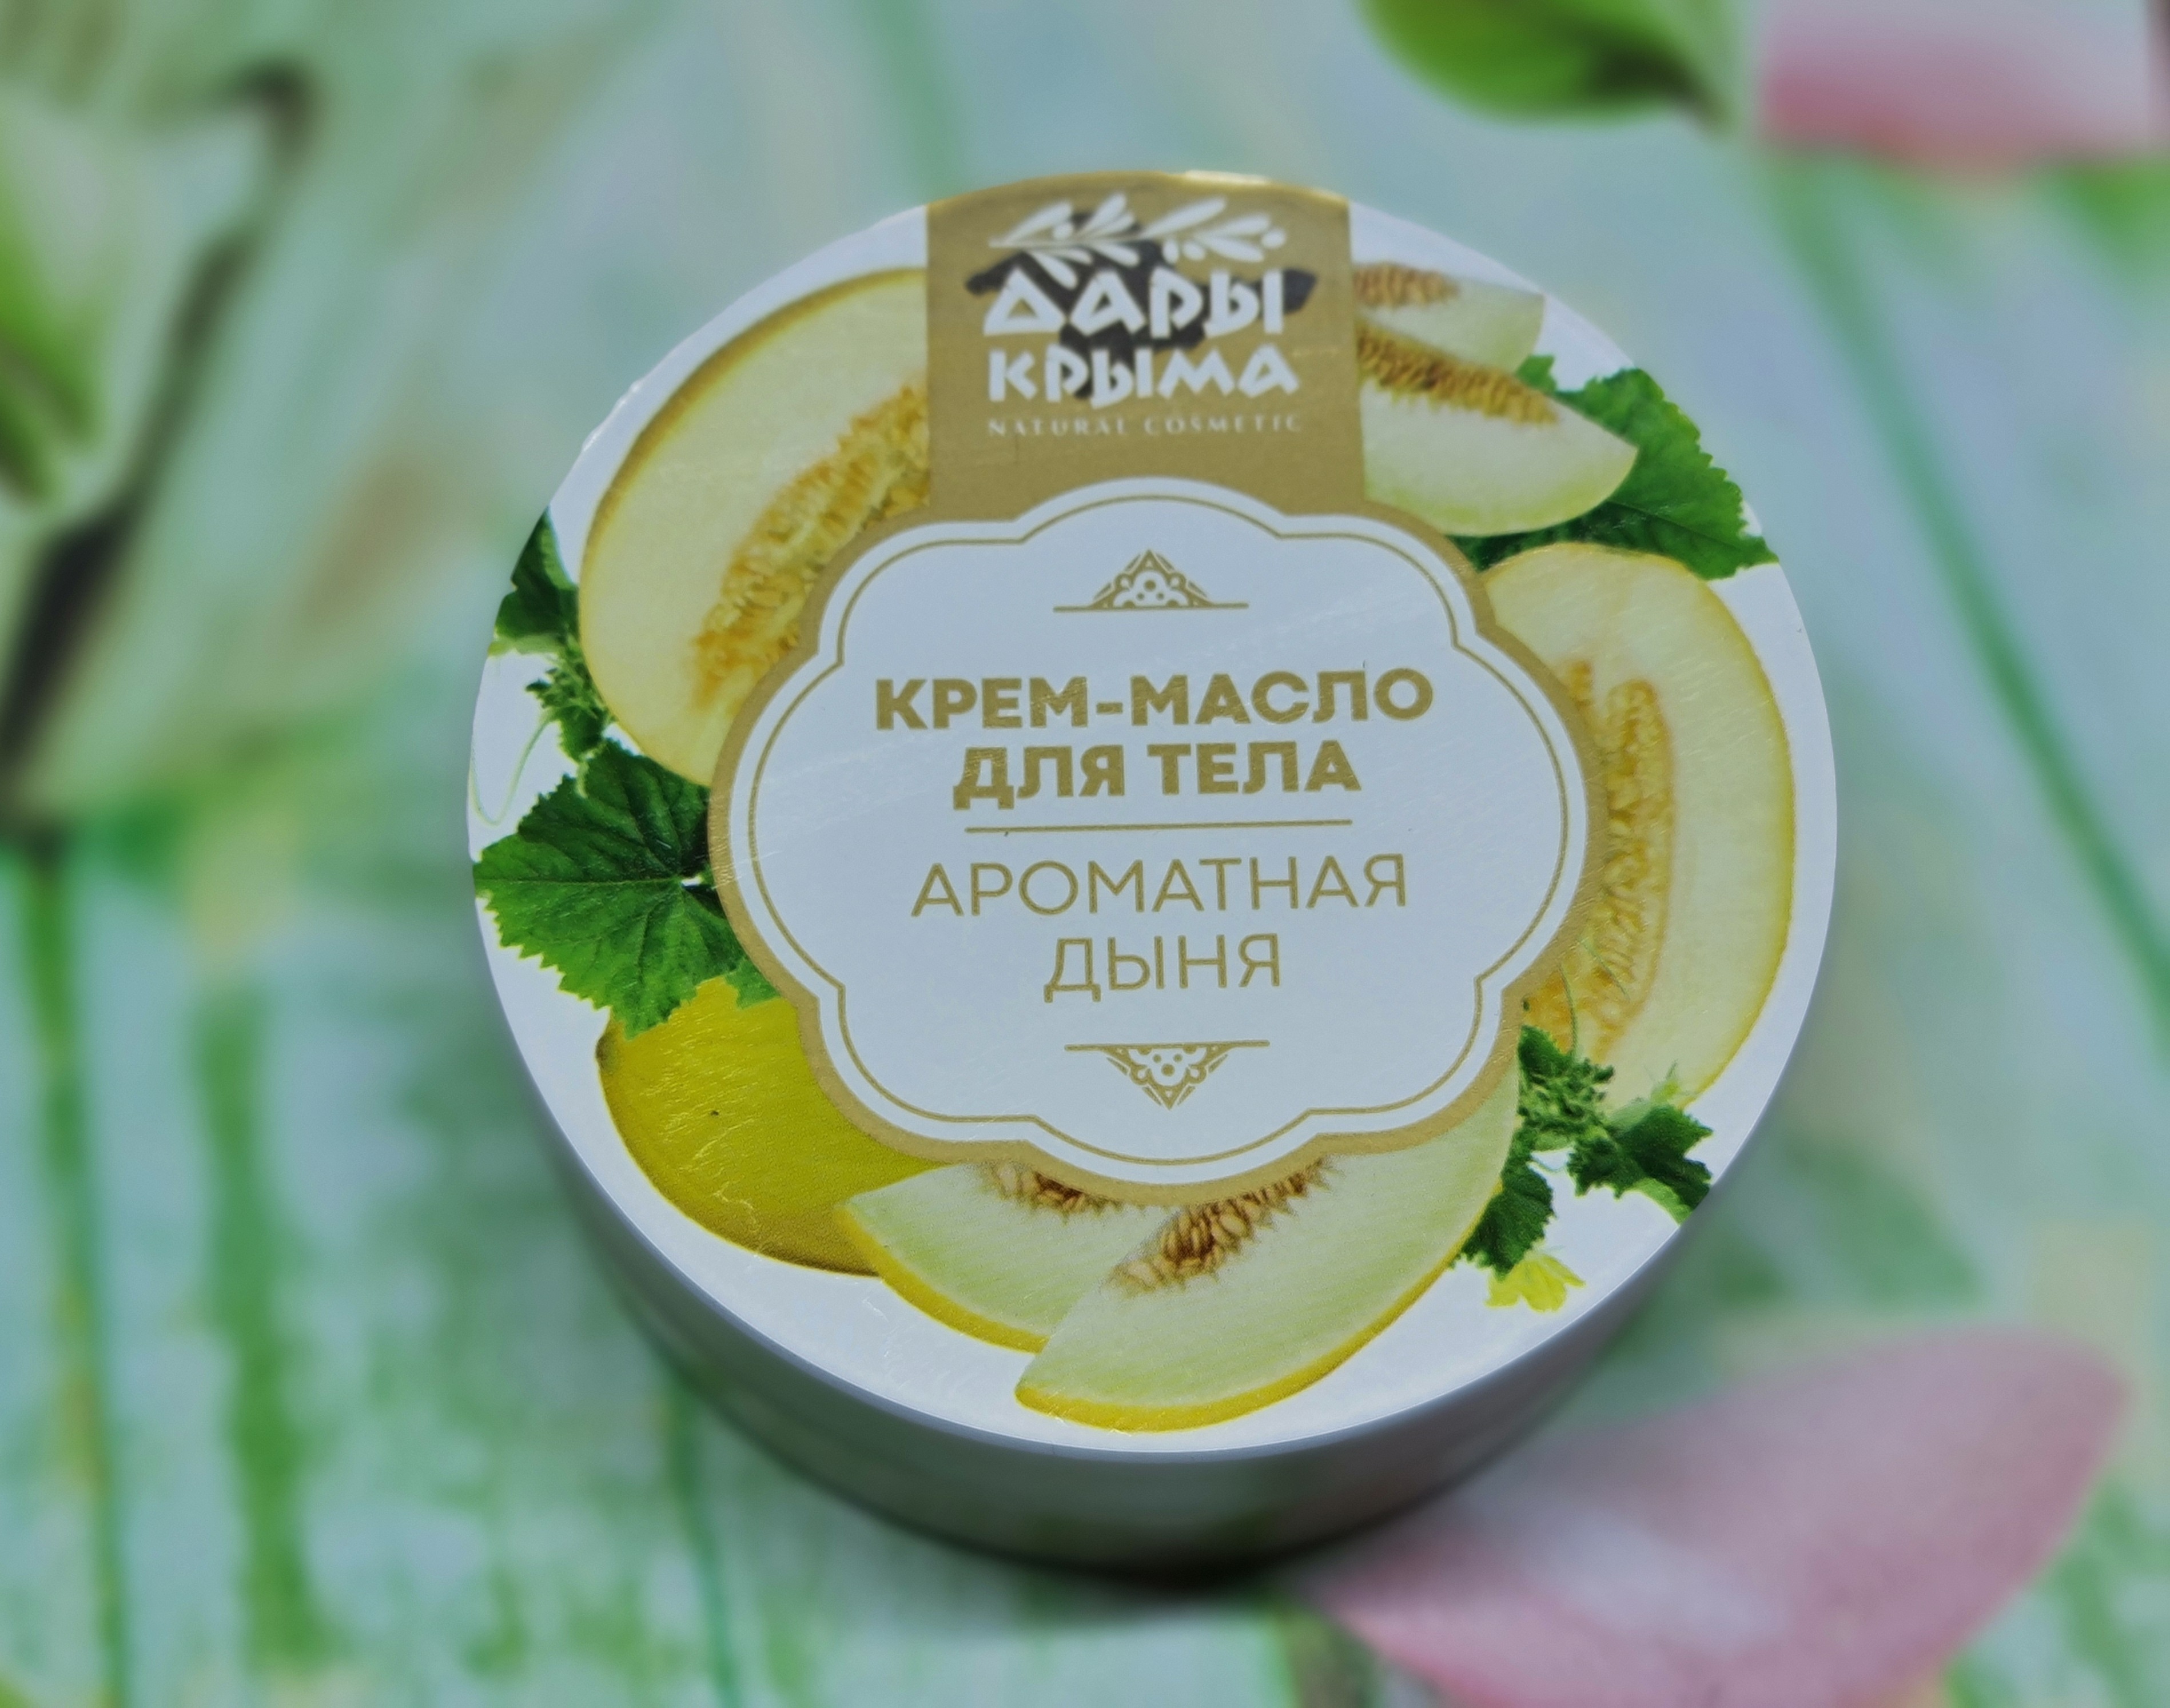 ДК Крем-масло для тела Ароматная дыня 150 гр.